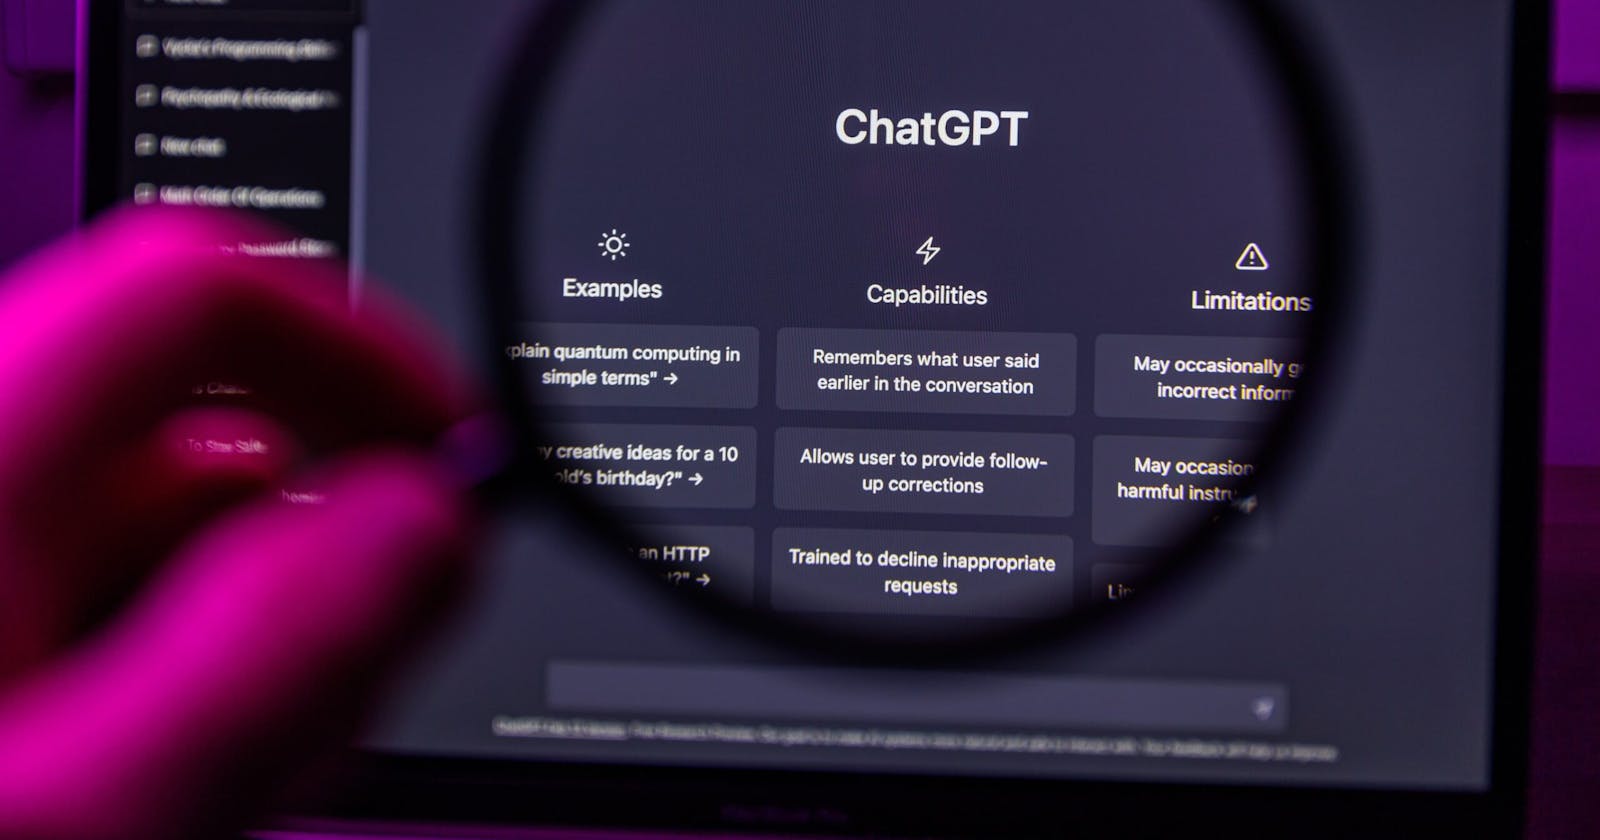 "Conversational AI Magic: Technothinksup's Chat GPT Implementation"